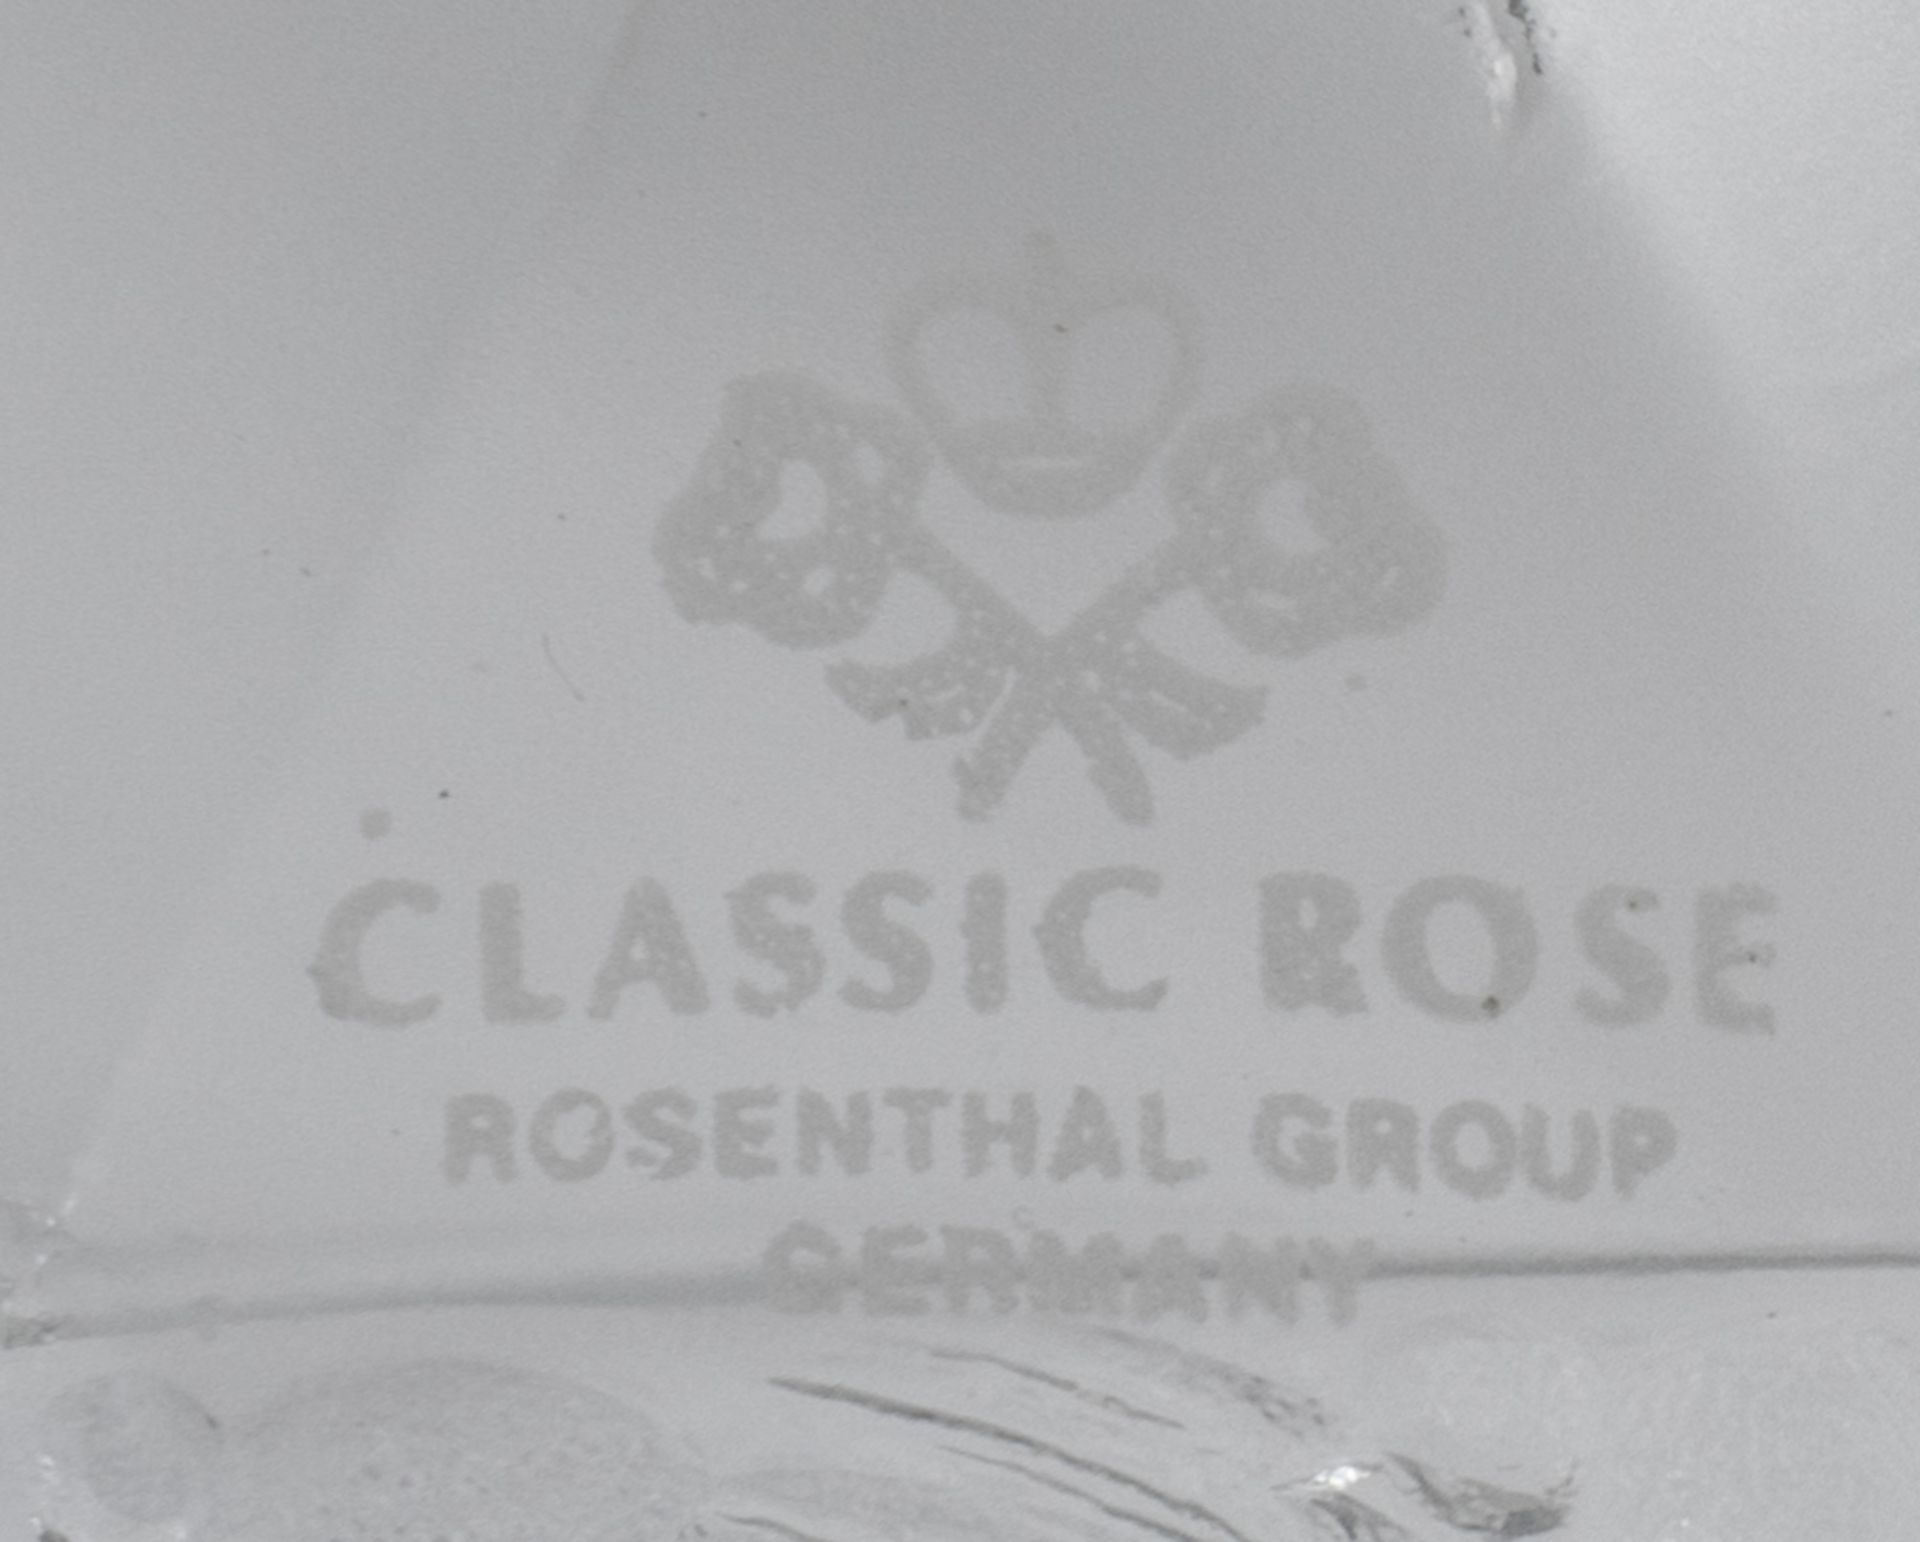 Rosenthal Classic Rose Glaskonvolut. Ein Sektglas bestoßen. - Image 2 of 2